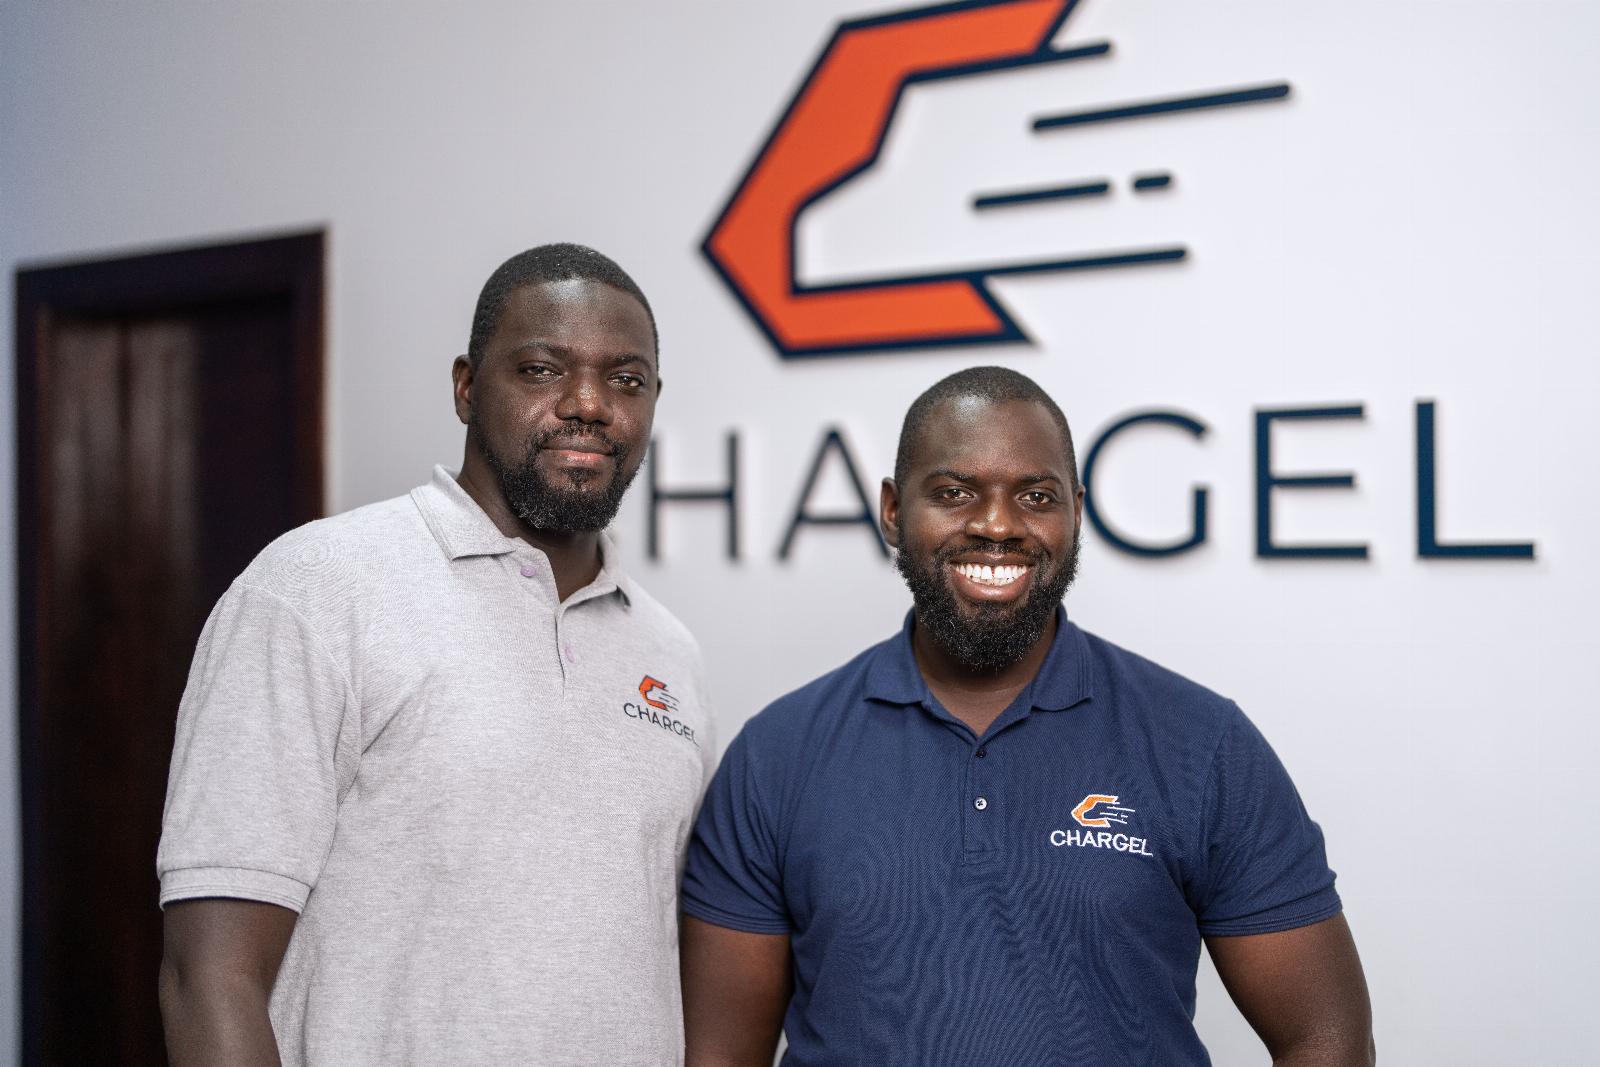 Senegal’s logistics tech startup Chargel raises $2.5M seed funding